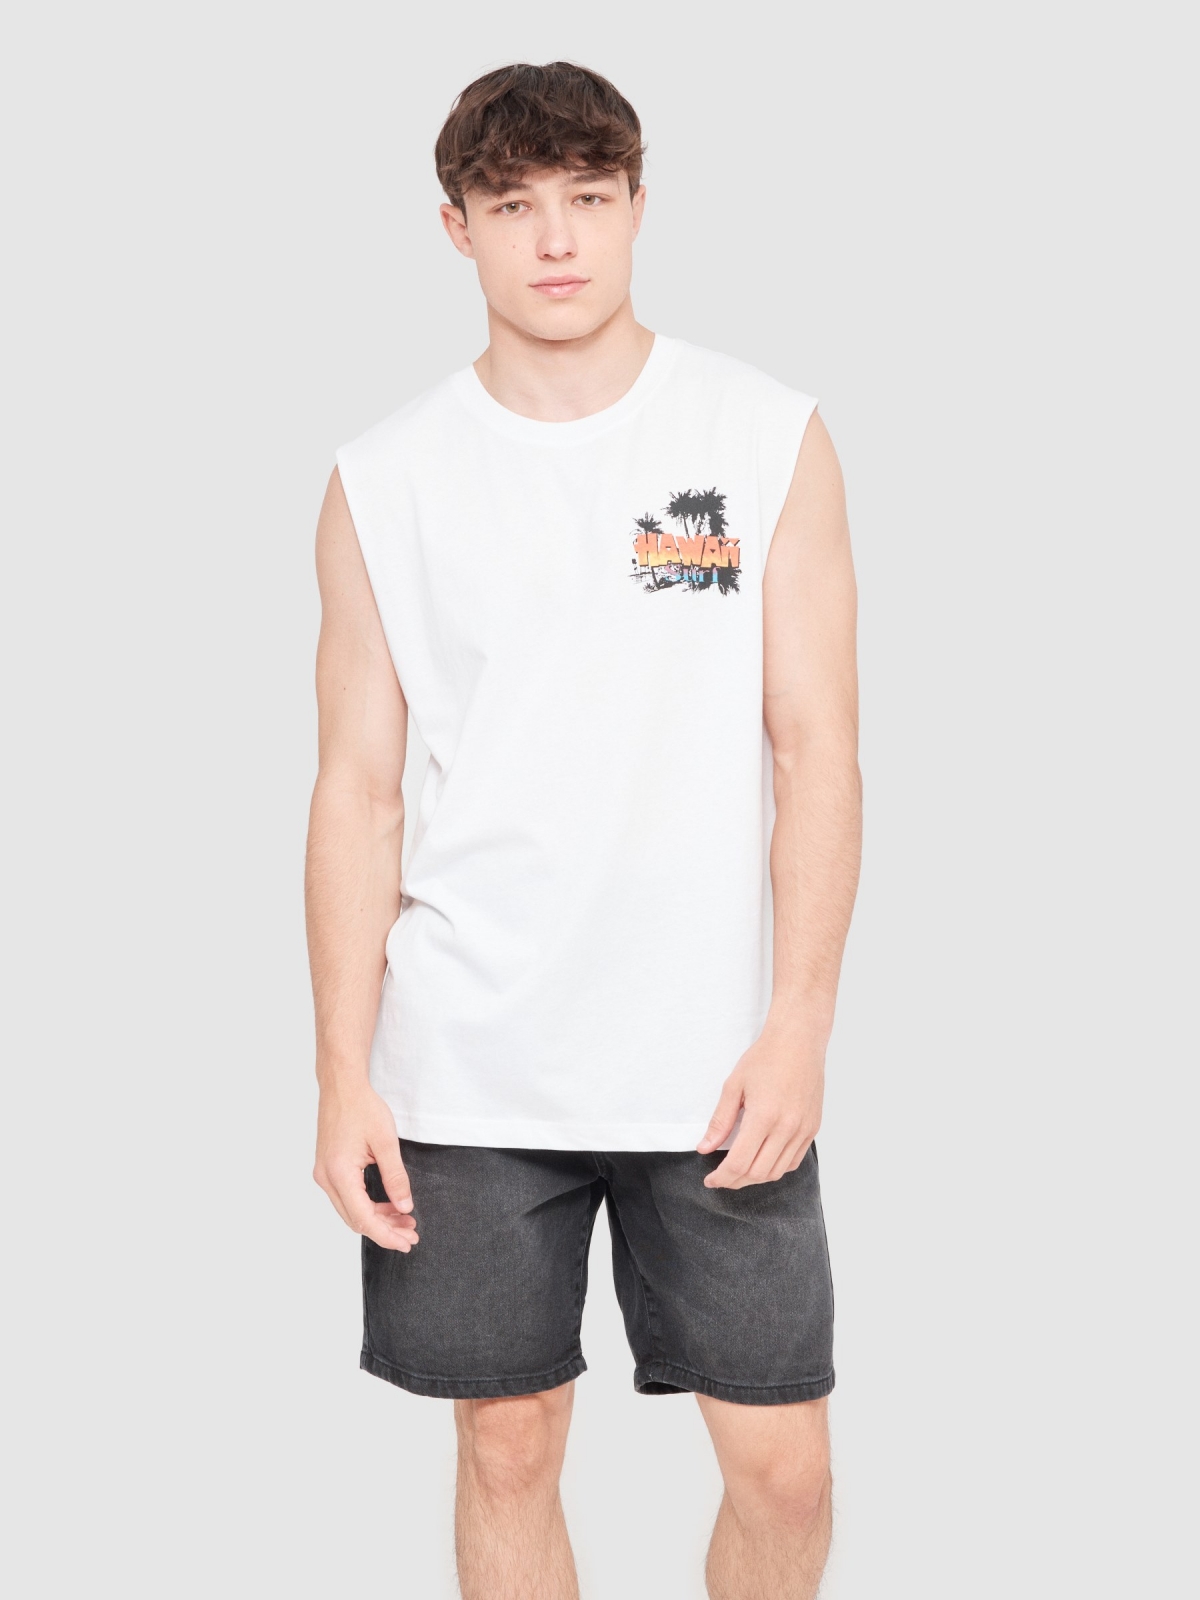 Camiseta desmangada Hawaii blanco vista media frontal